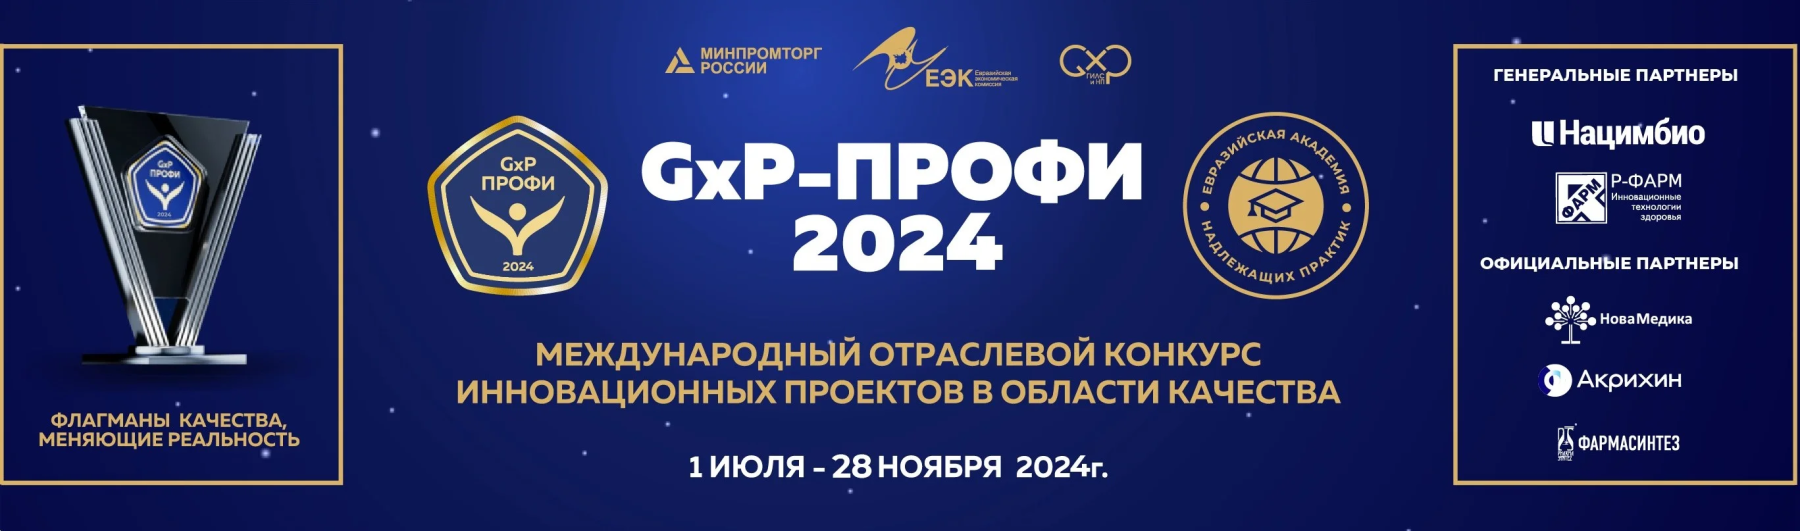 Партнёры GxP-Профи 2024